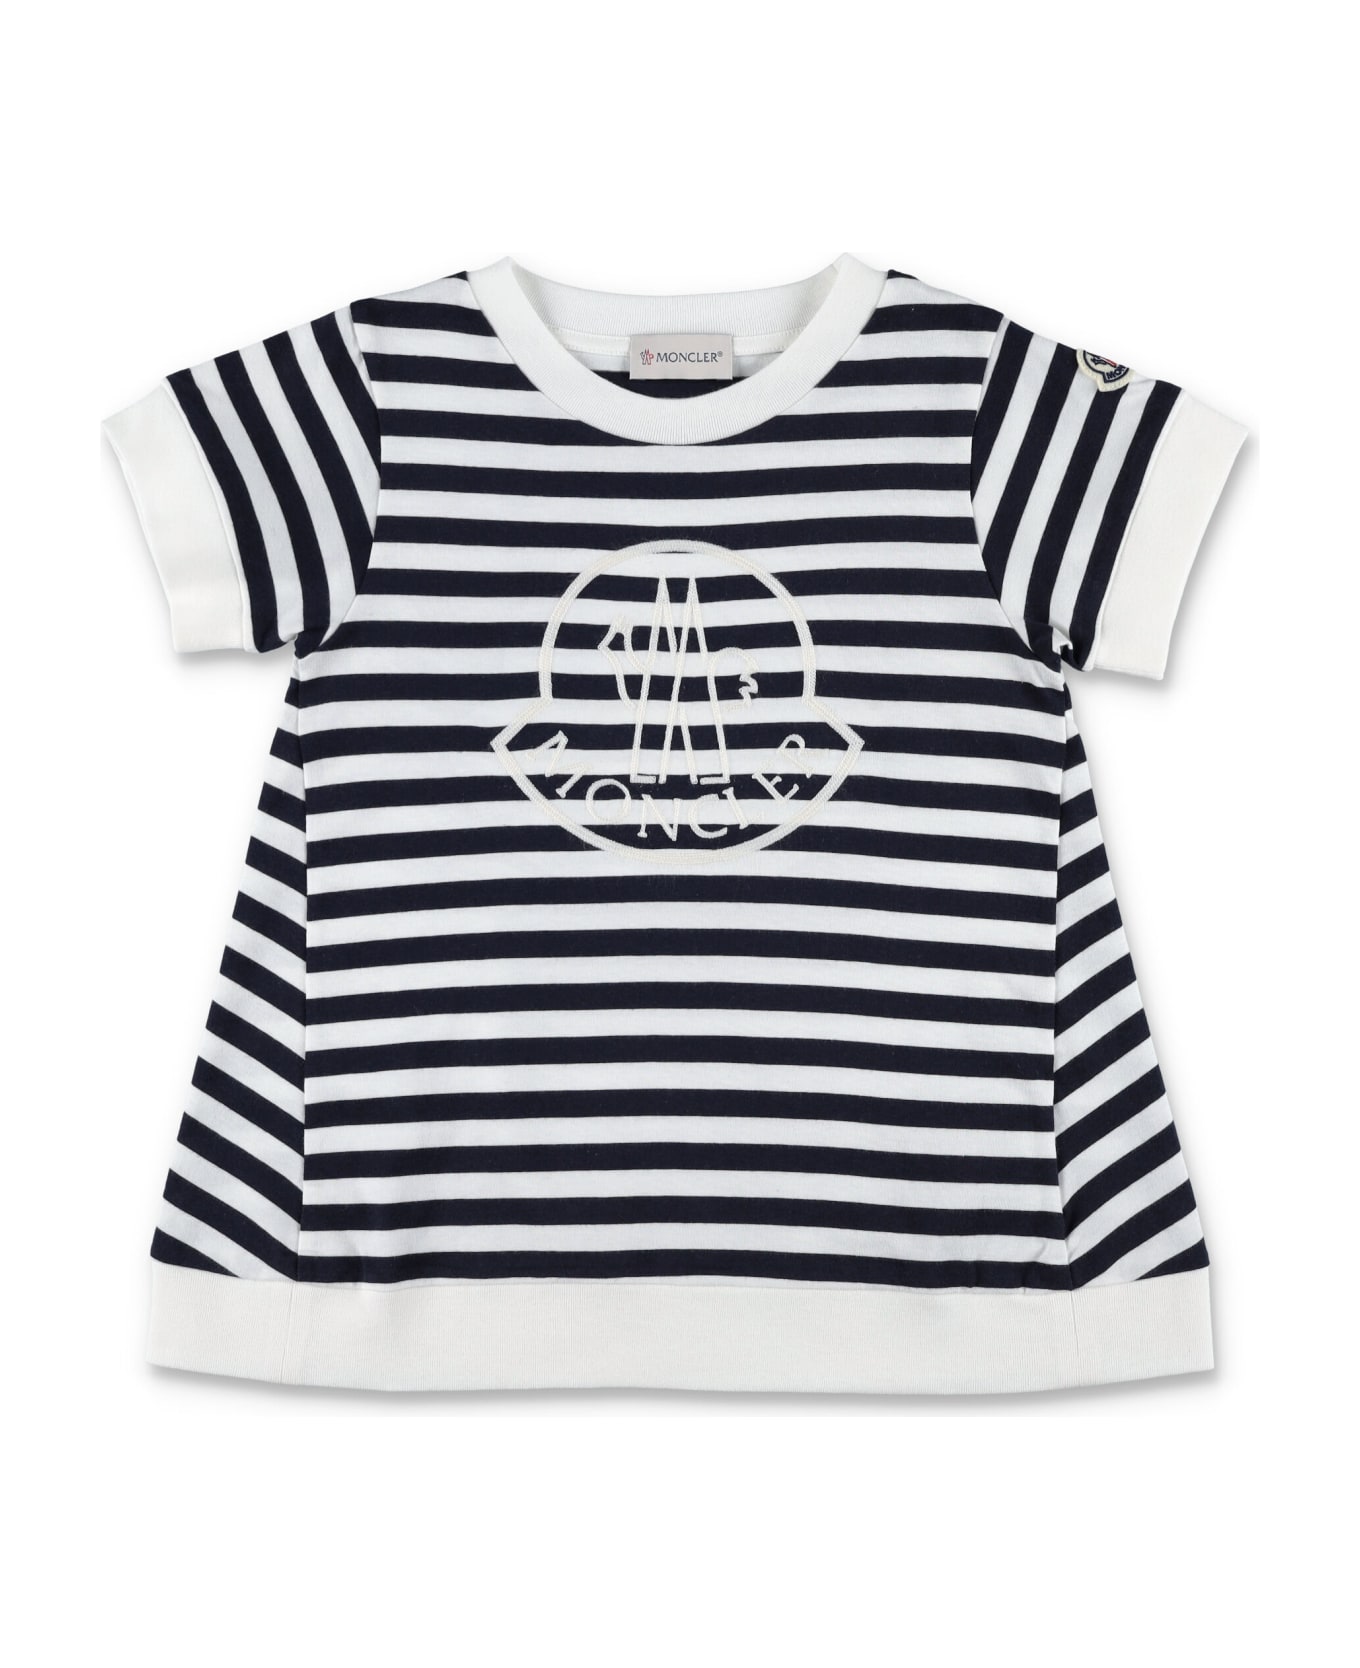 Moncler Stripes T-shirt - WHITE/BLACK